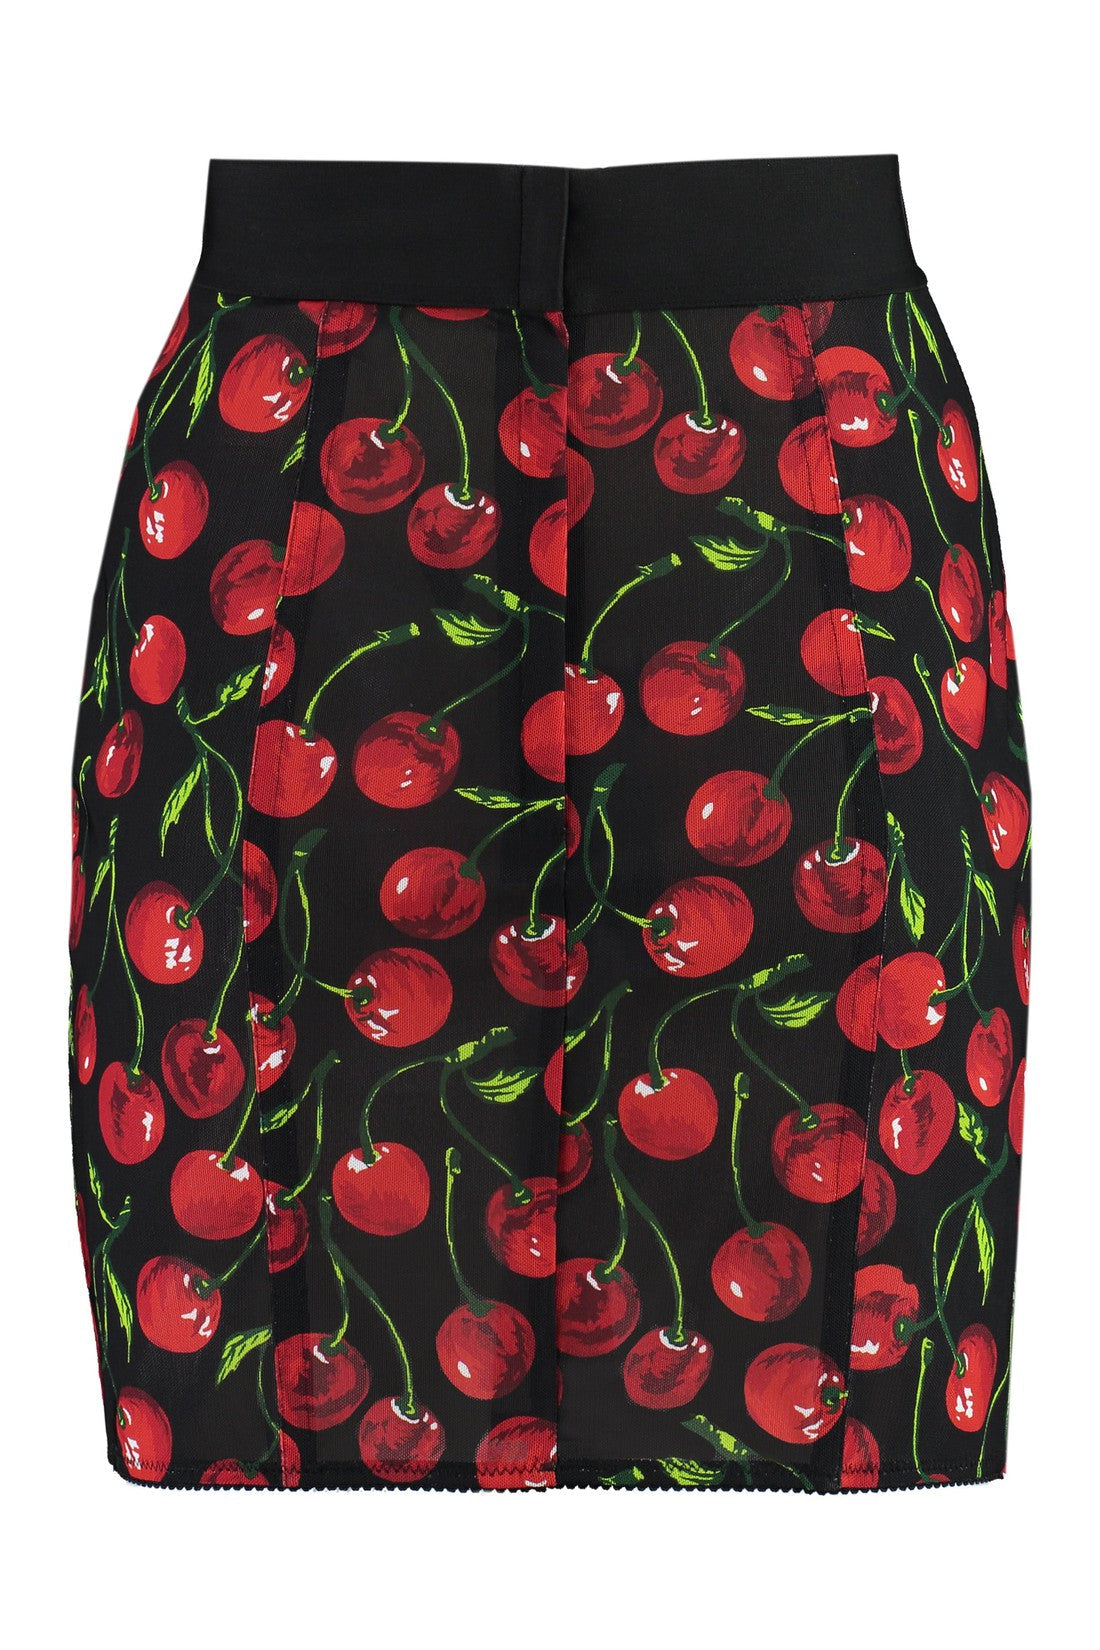 Dolce & Gabbana-OUTLET-SALE-Printed mini-skirt-ARCHIVIST